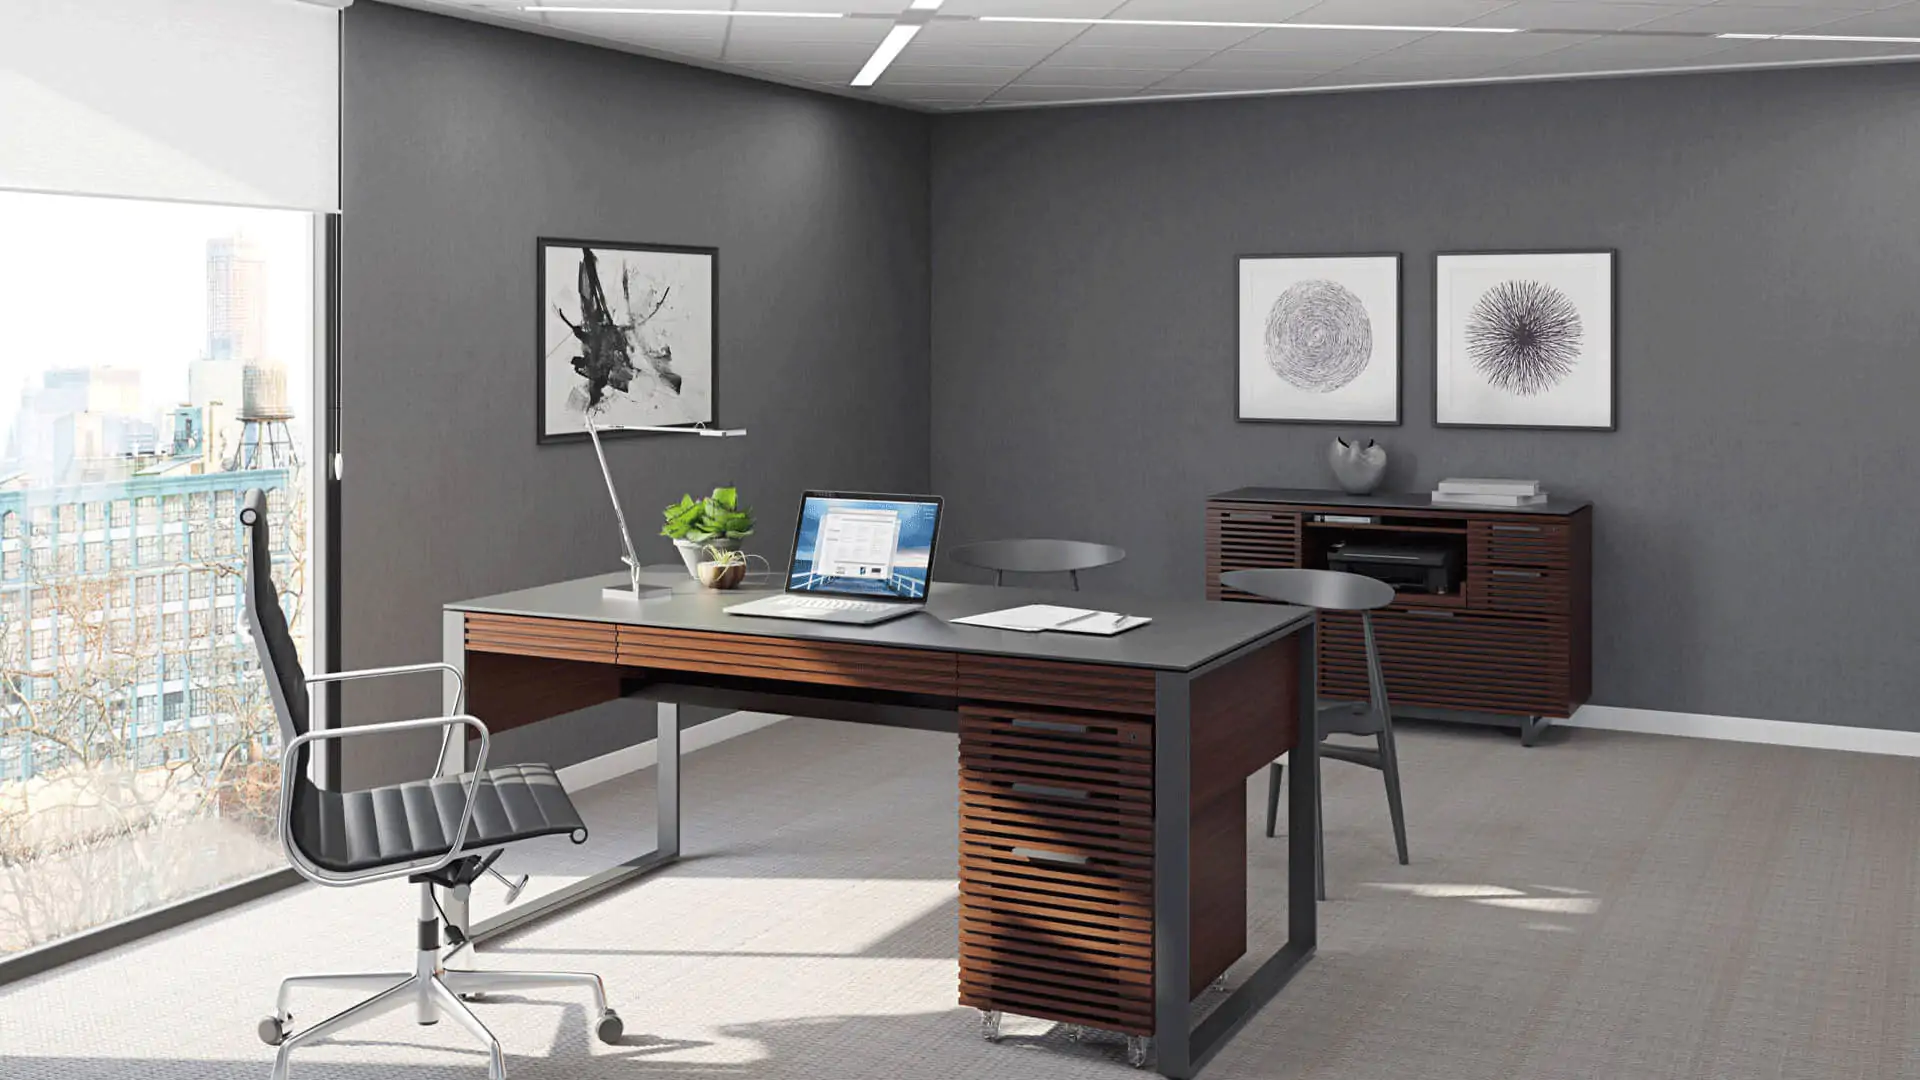 Manager Room Interior Design (6)